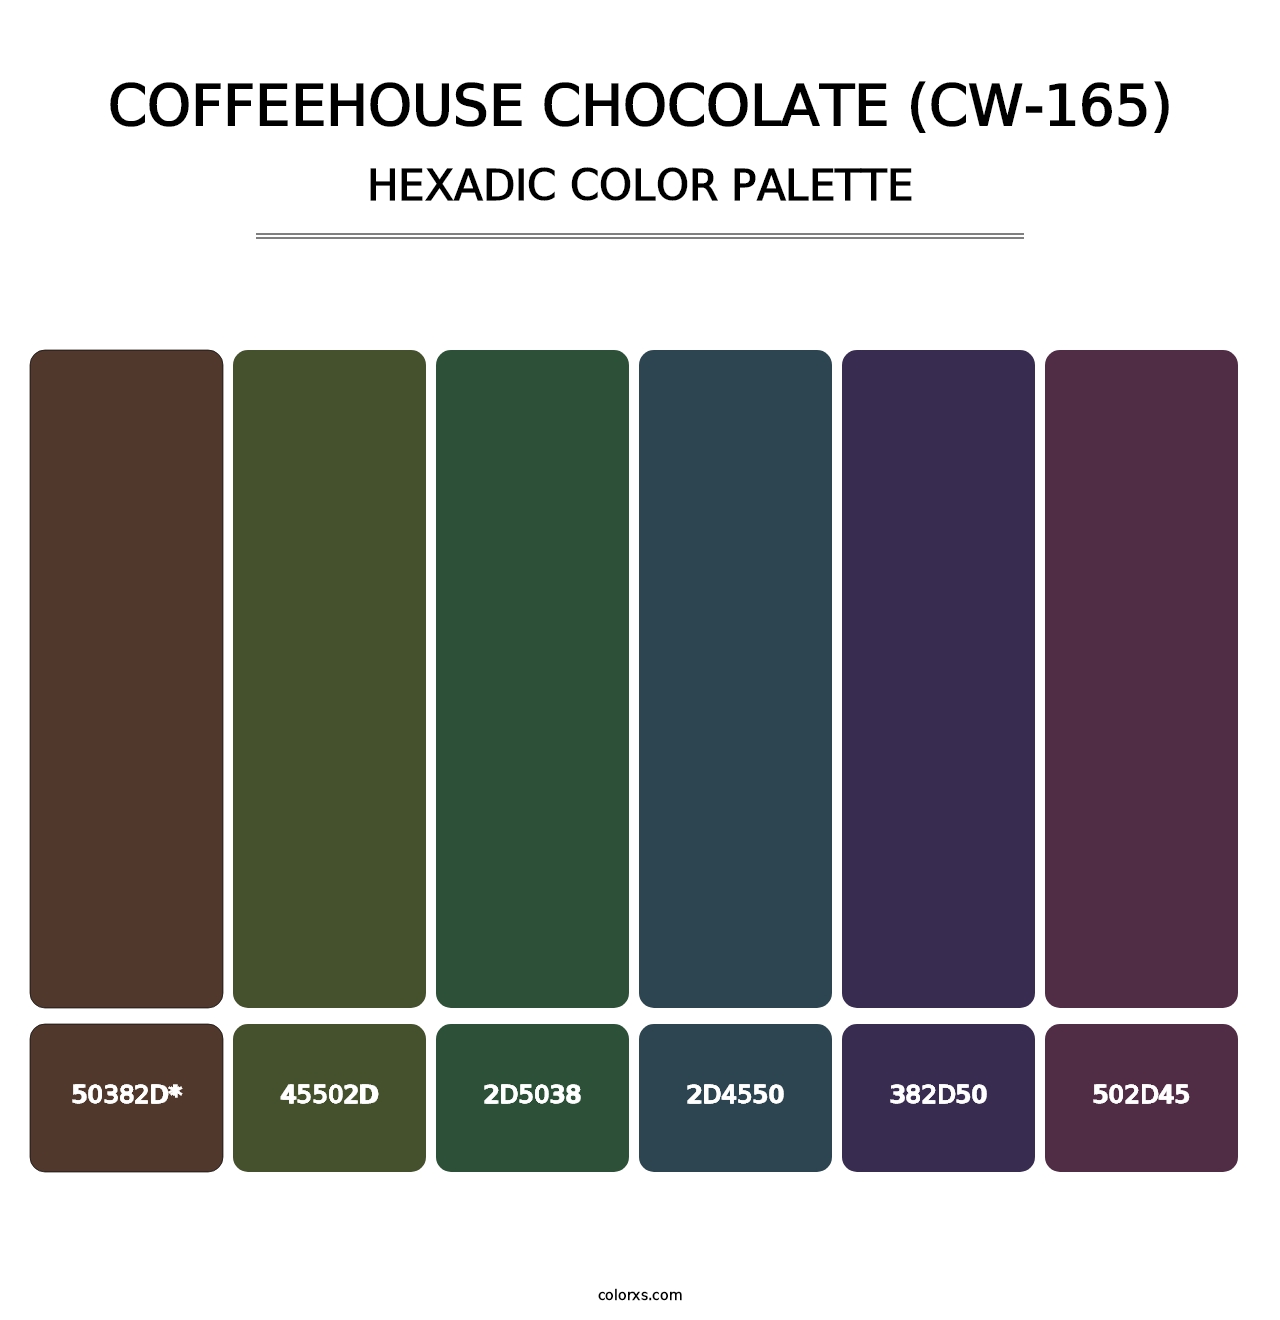 Coffeehouse Chocolate (CW-165) - Hexadic Color Palette